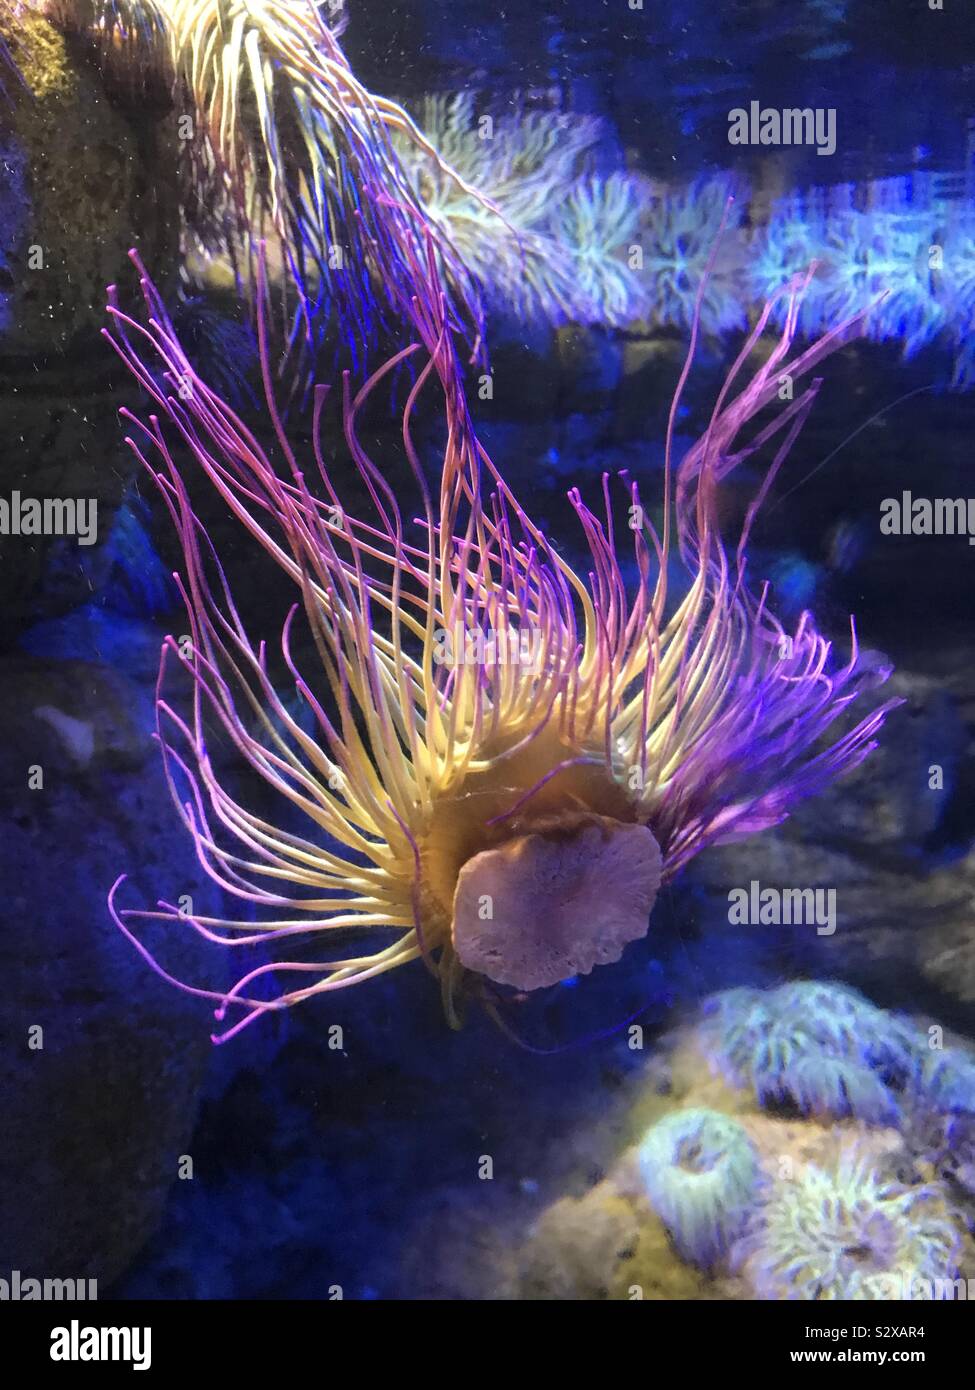 Vivid, brightly coloured sea anemone close up Stock Photo